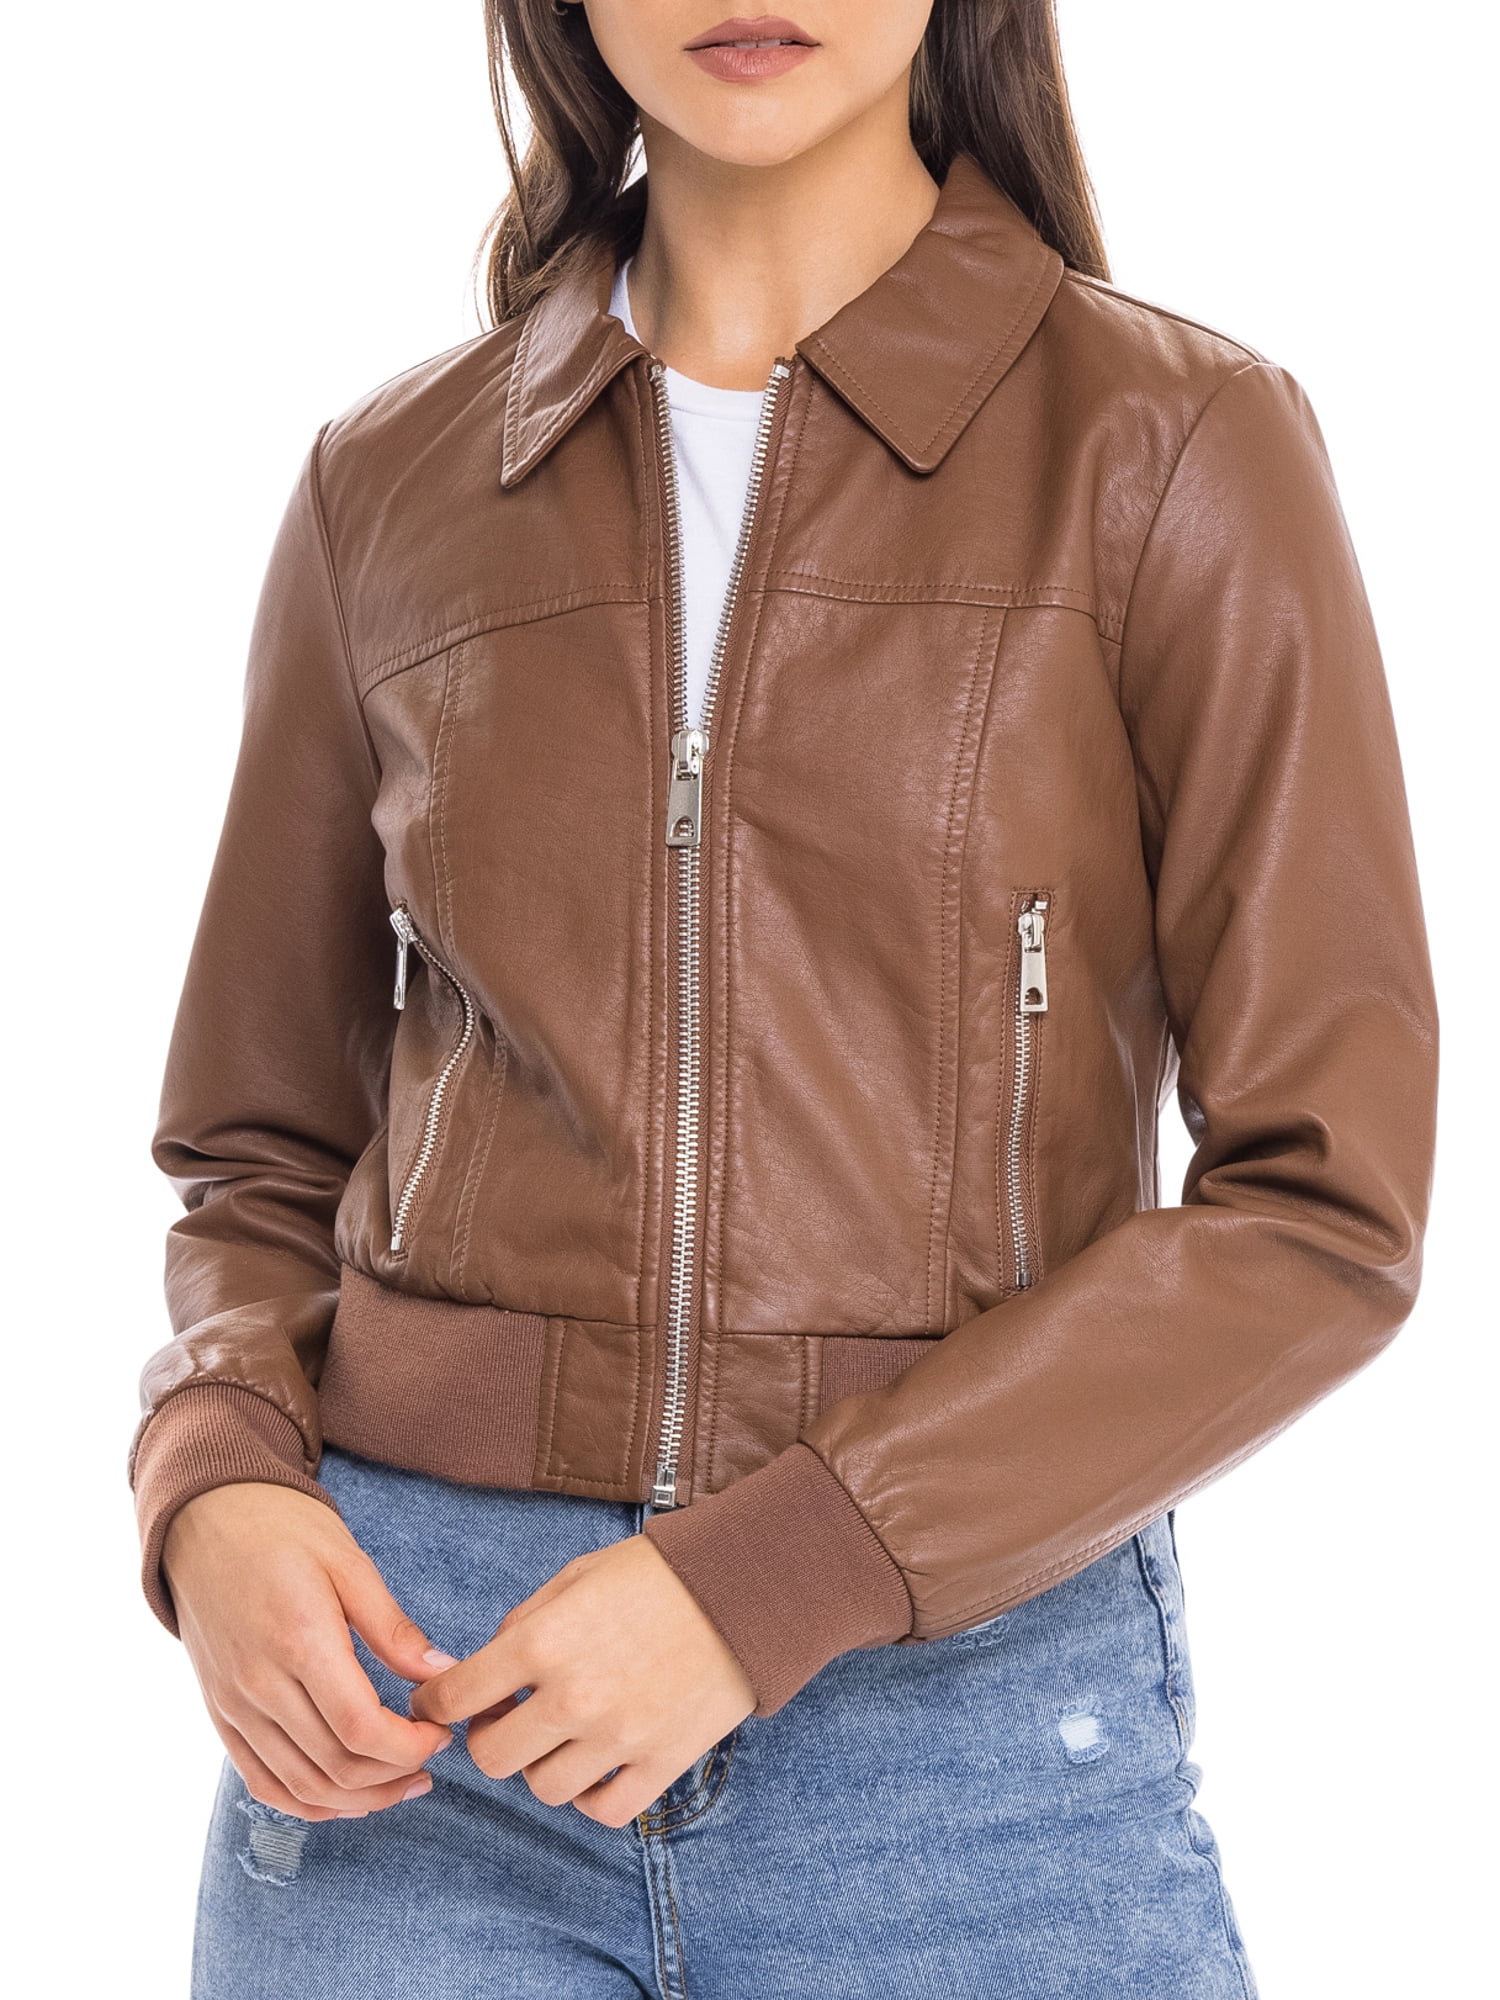 Women Brown Leather Motorcycle Jacket Leather Jacket Slim Fit Lightweight Jacket Ladies